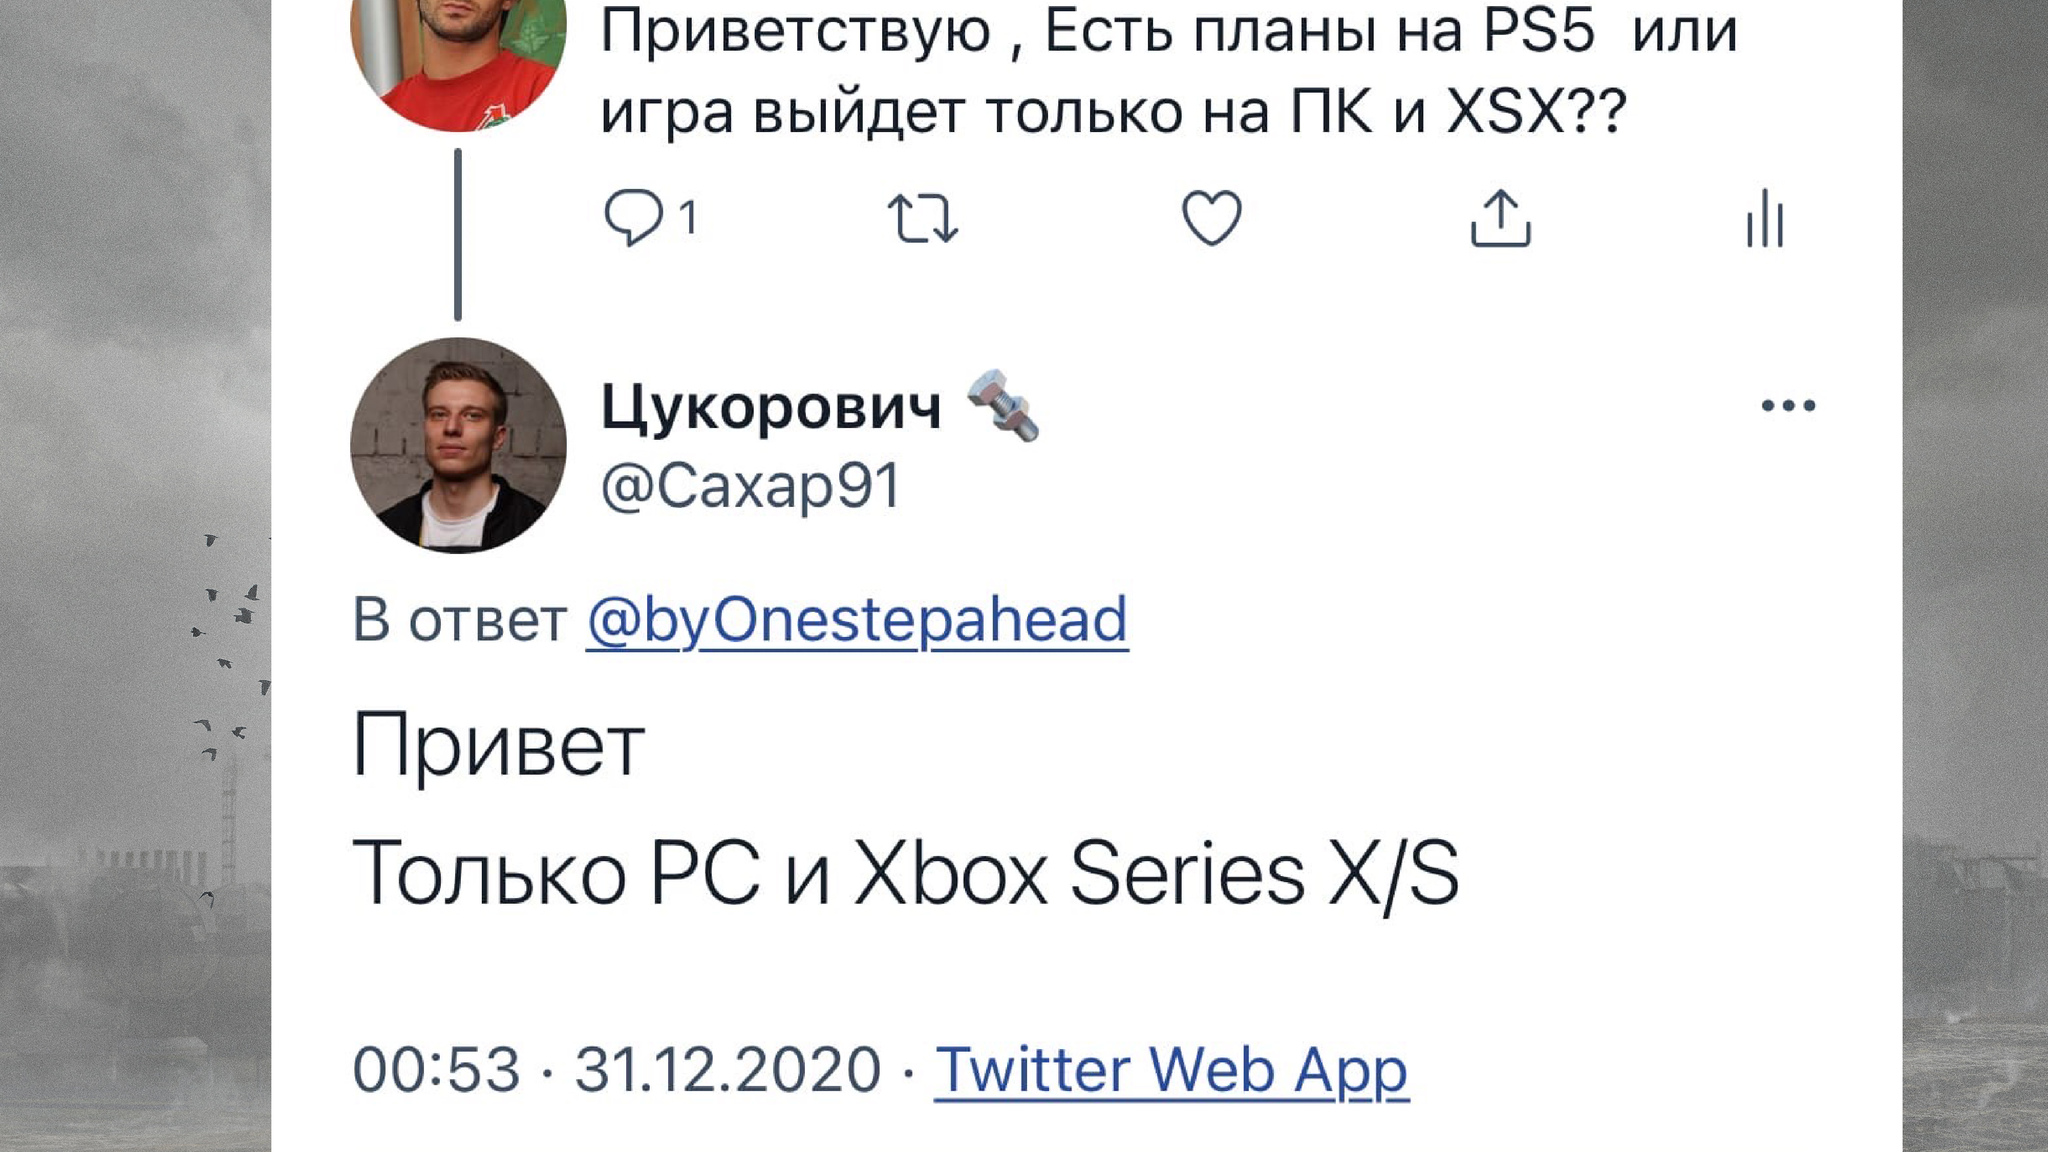 STALKER 2 will not be released on PS5 - My, Stalker 2, Stalker, 2021, Gameplay, Teaser, Trailer, GSC, Stalker 2: Heart of Chernobyl